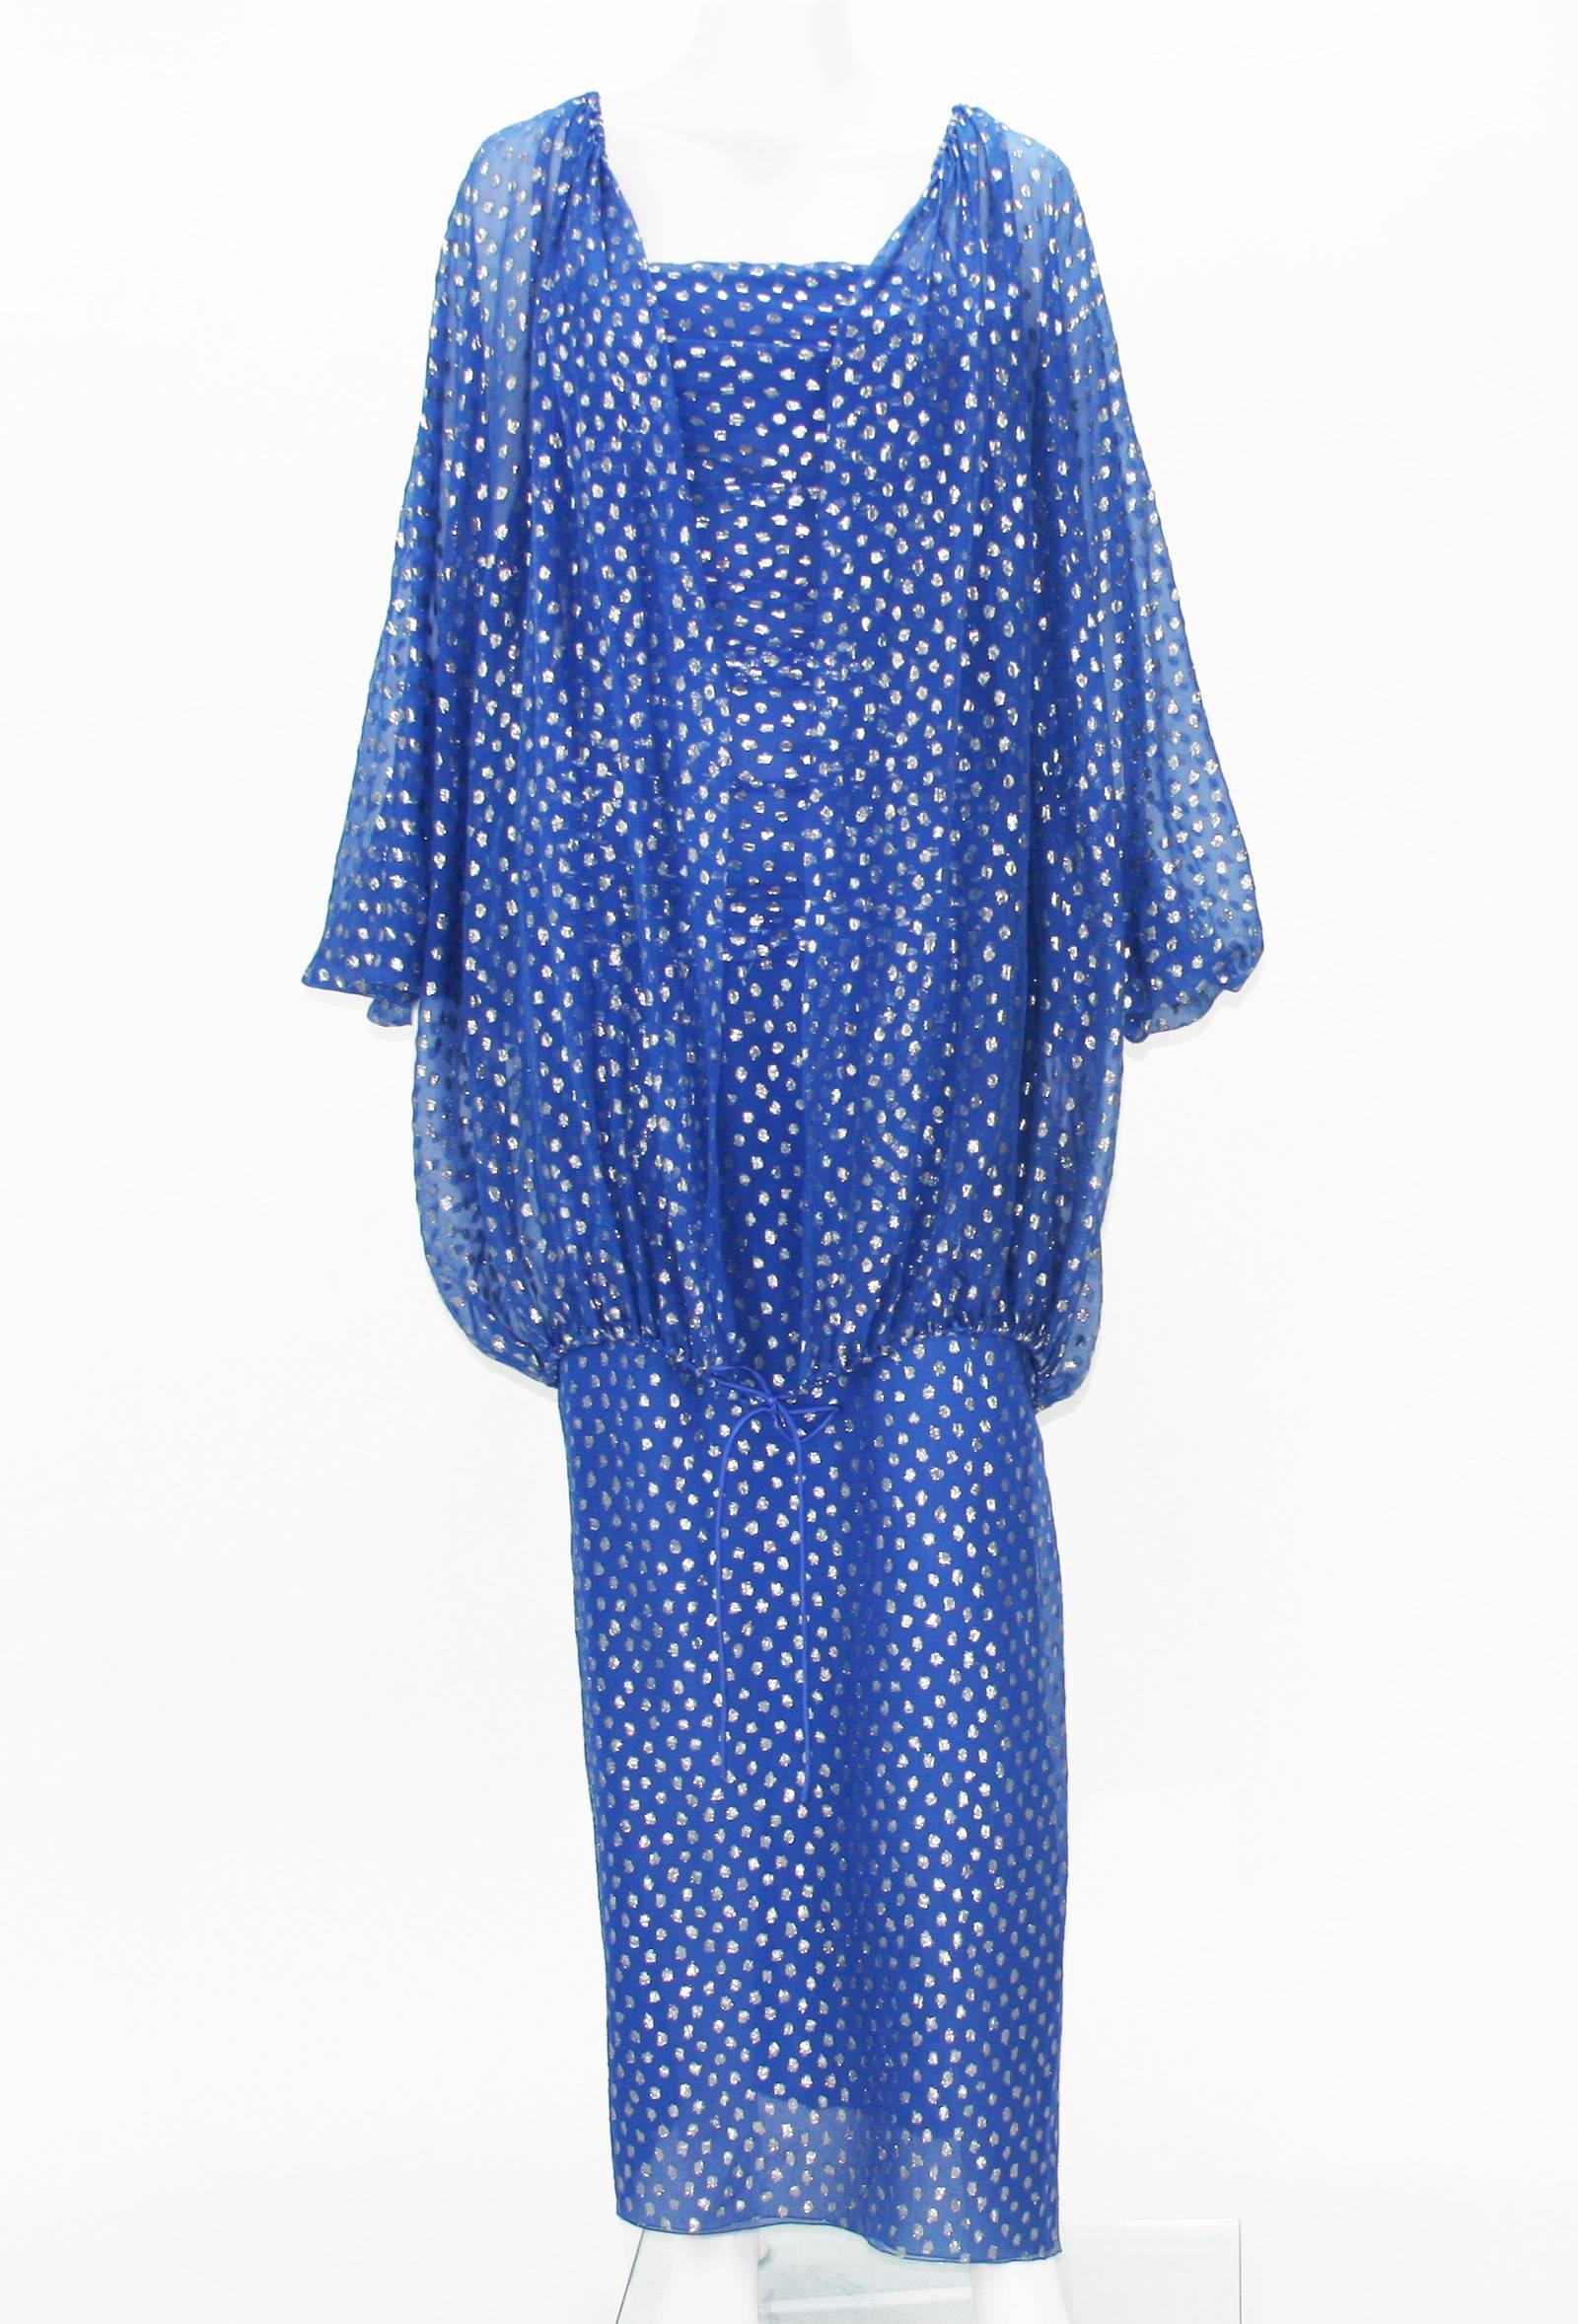 Christian Dior Paris F/W 1976 Numbered Polka Dot Blue Sheer Dress Set 9